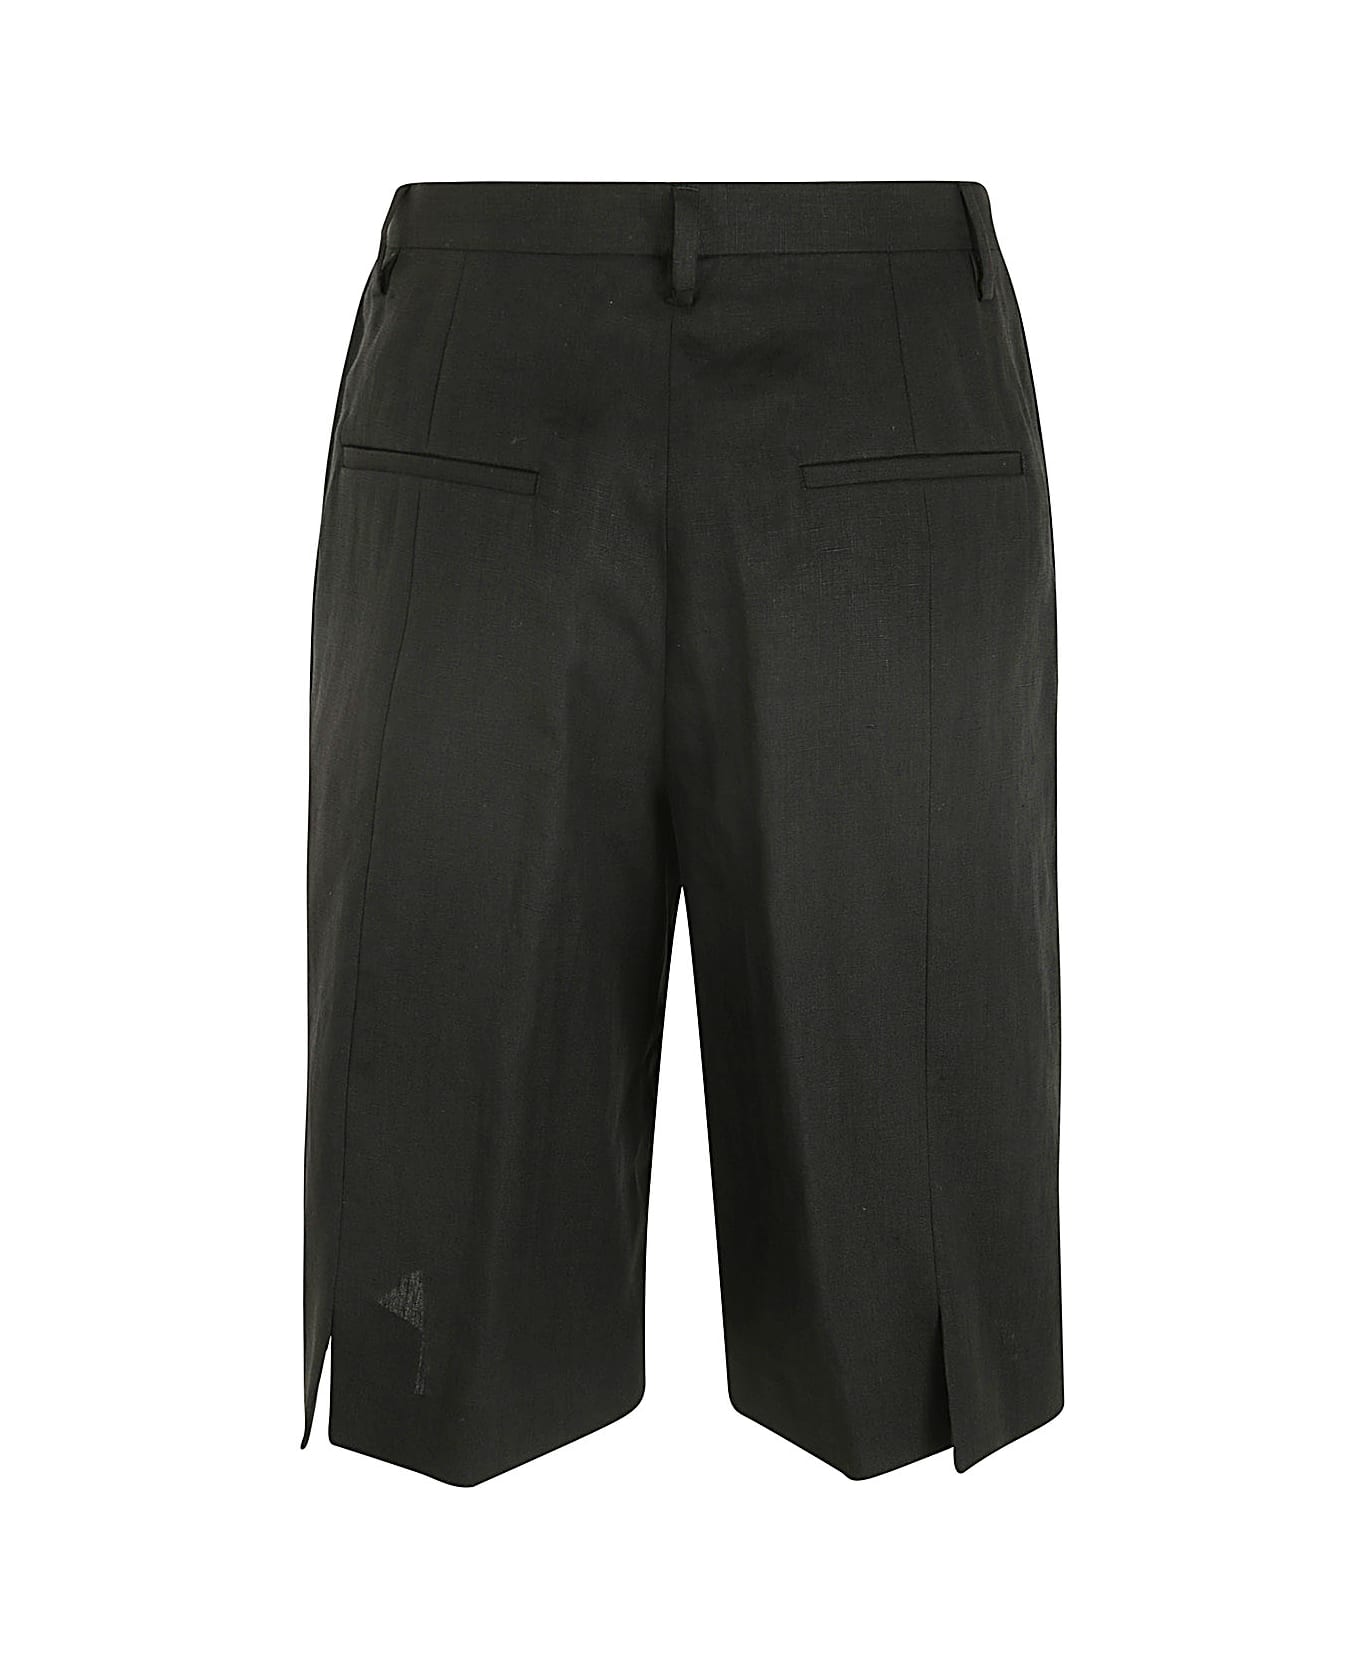 Paul Smith Longuette Shorts - Black